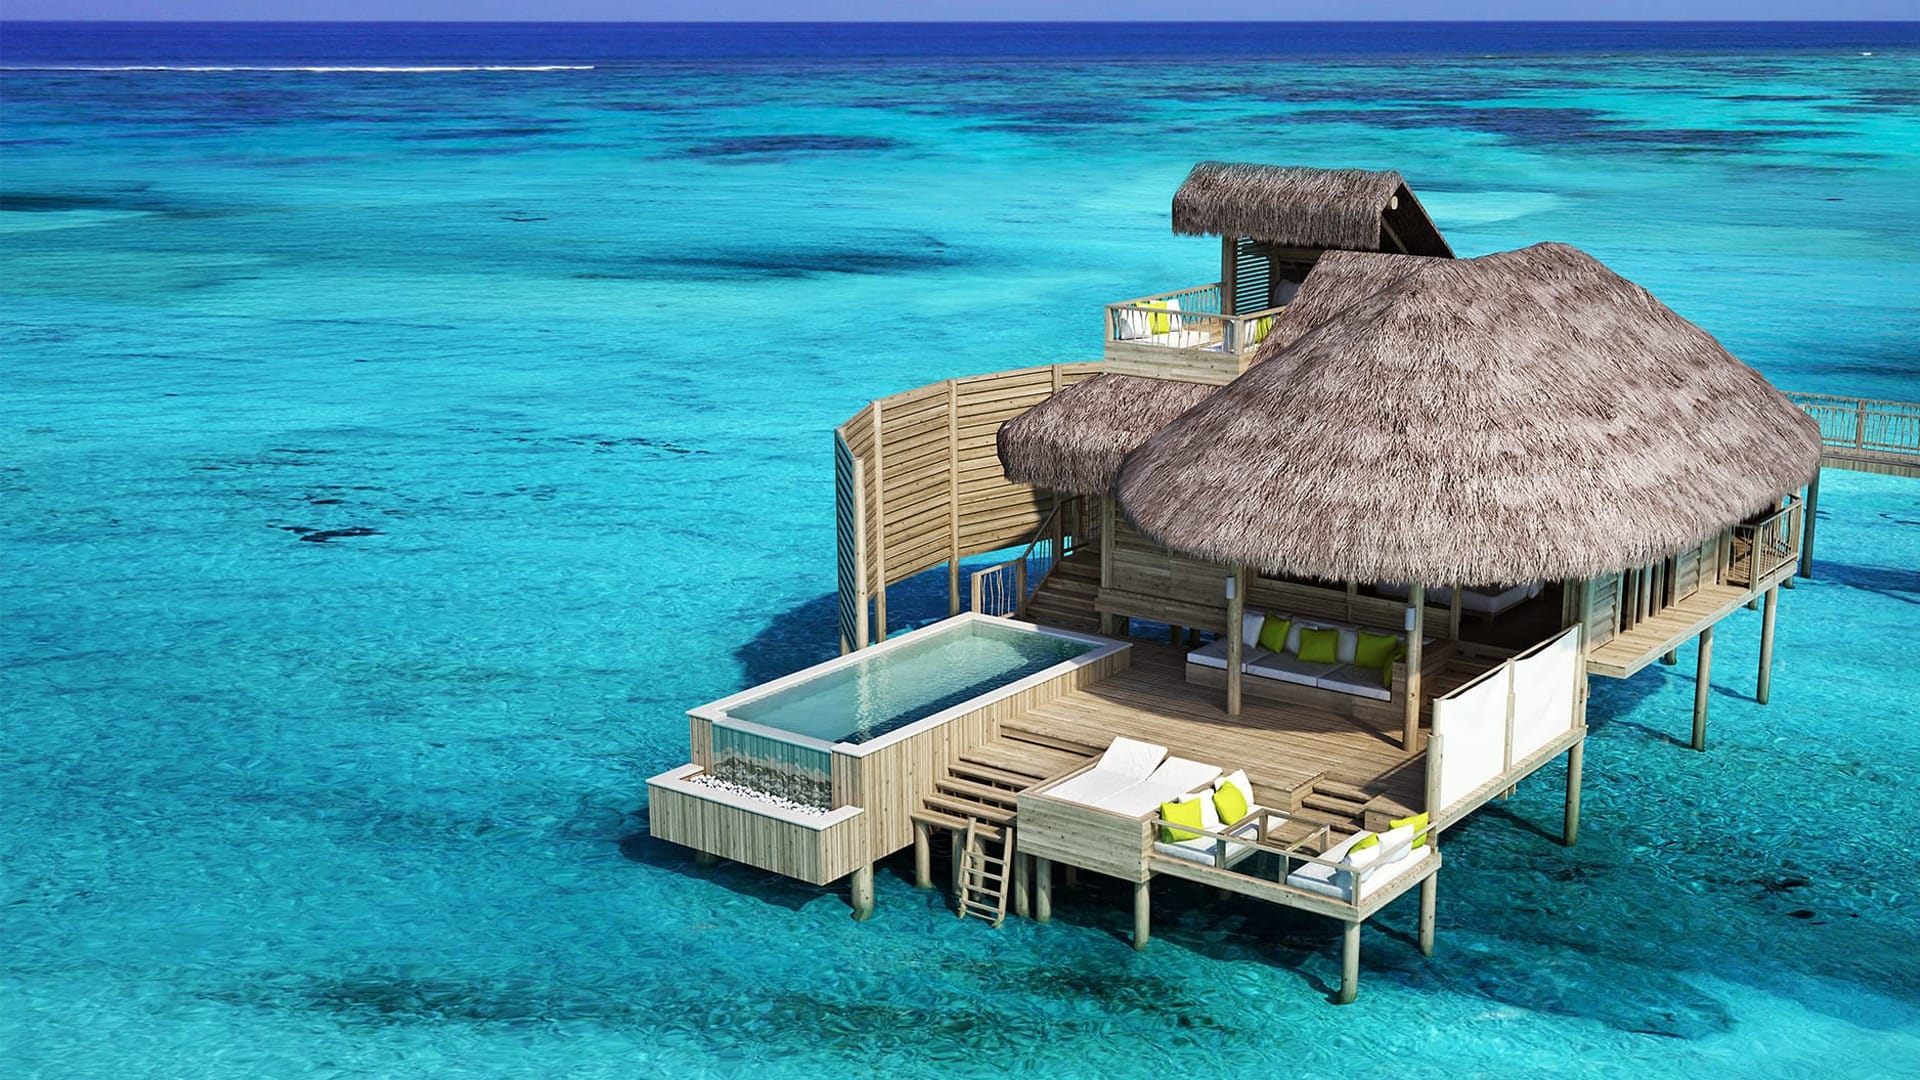 Most popular beach destinations in the world - The Maldives